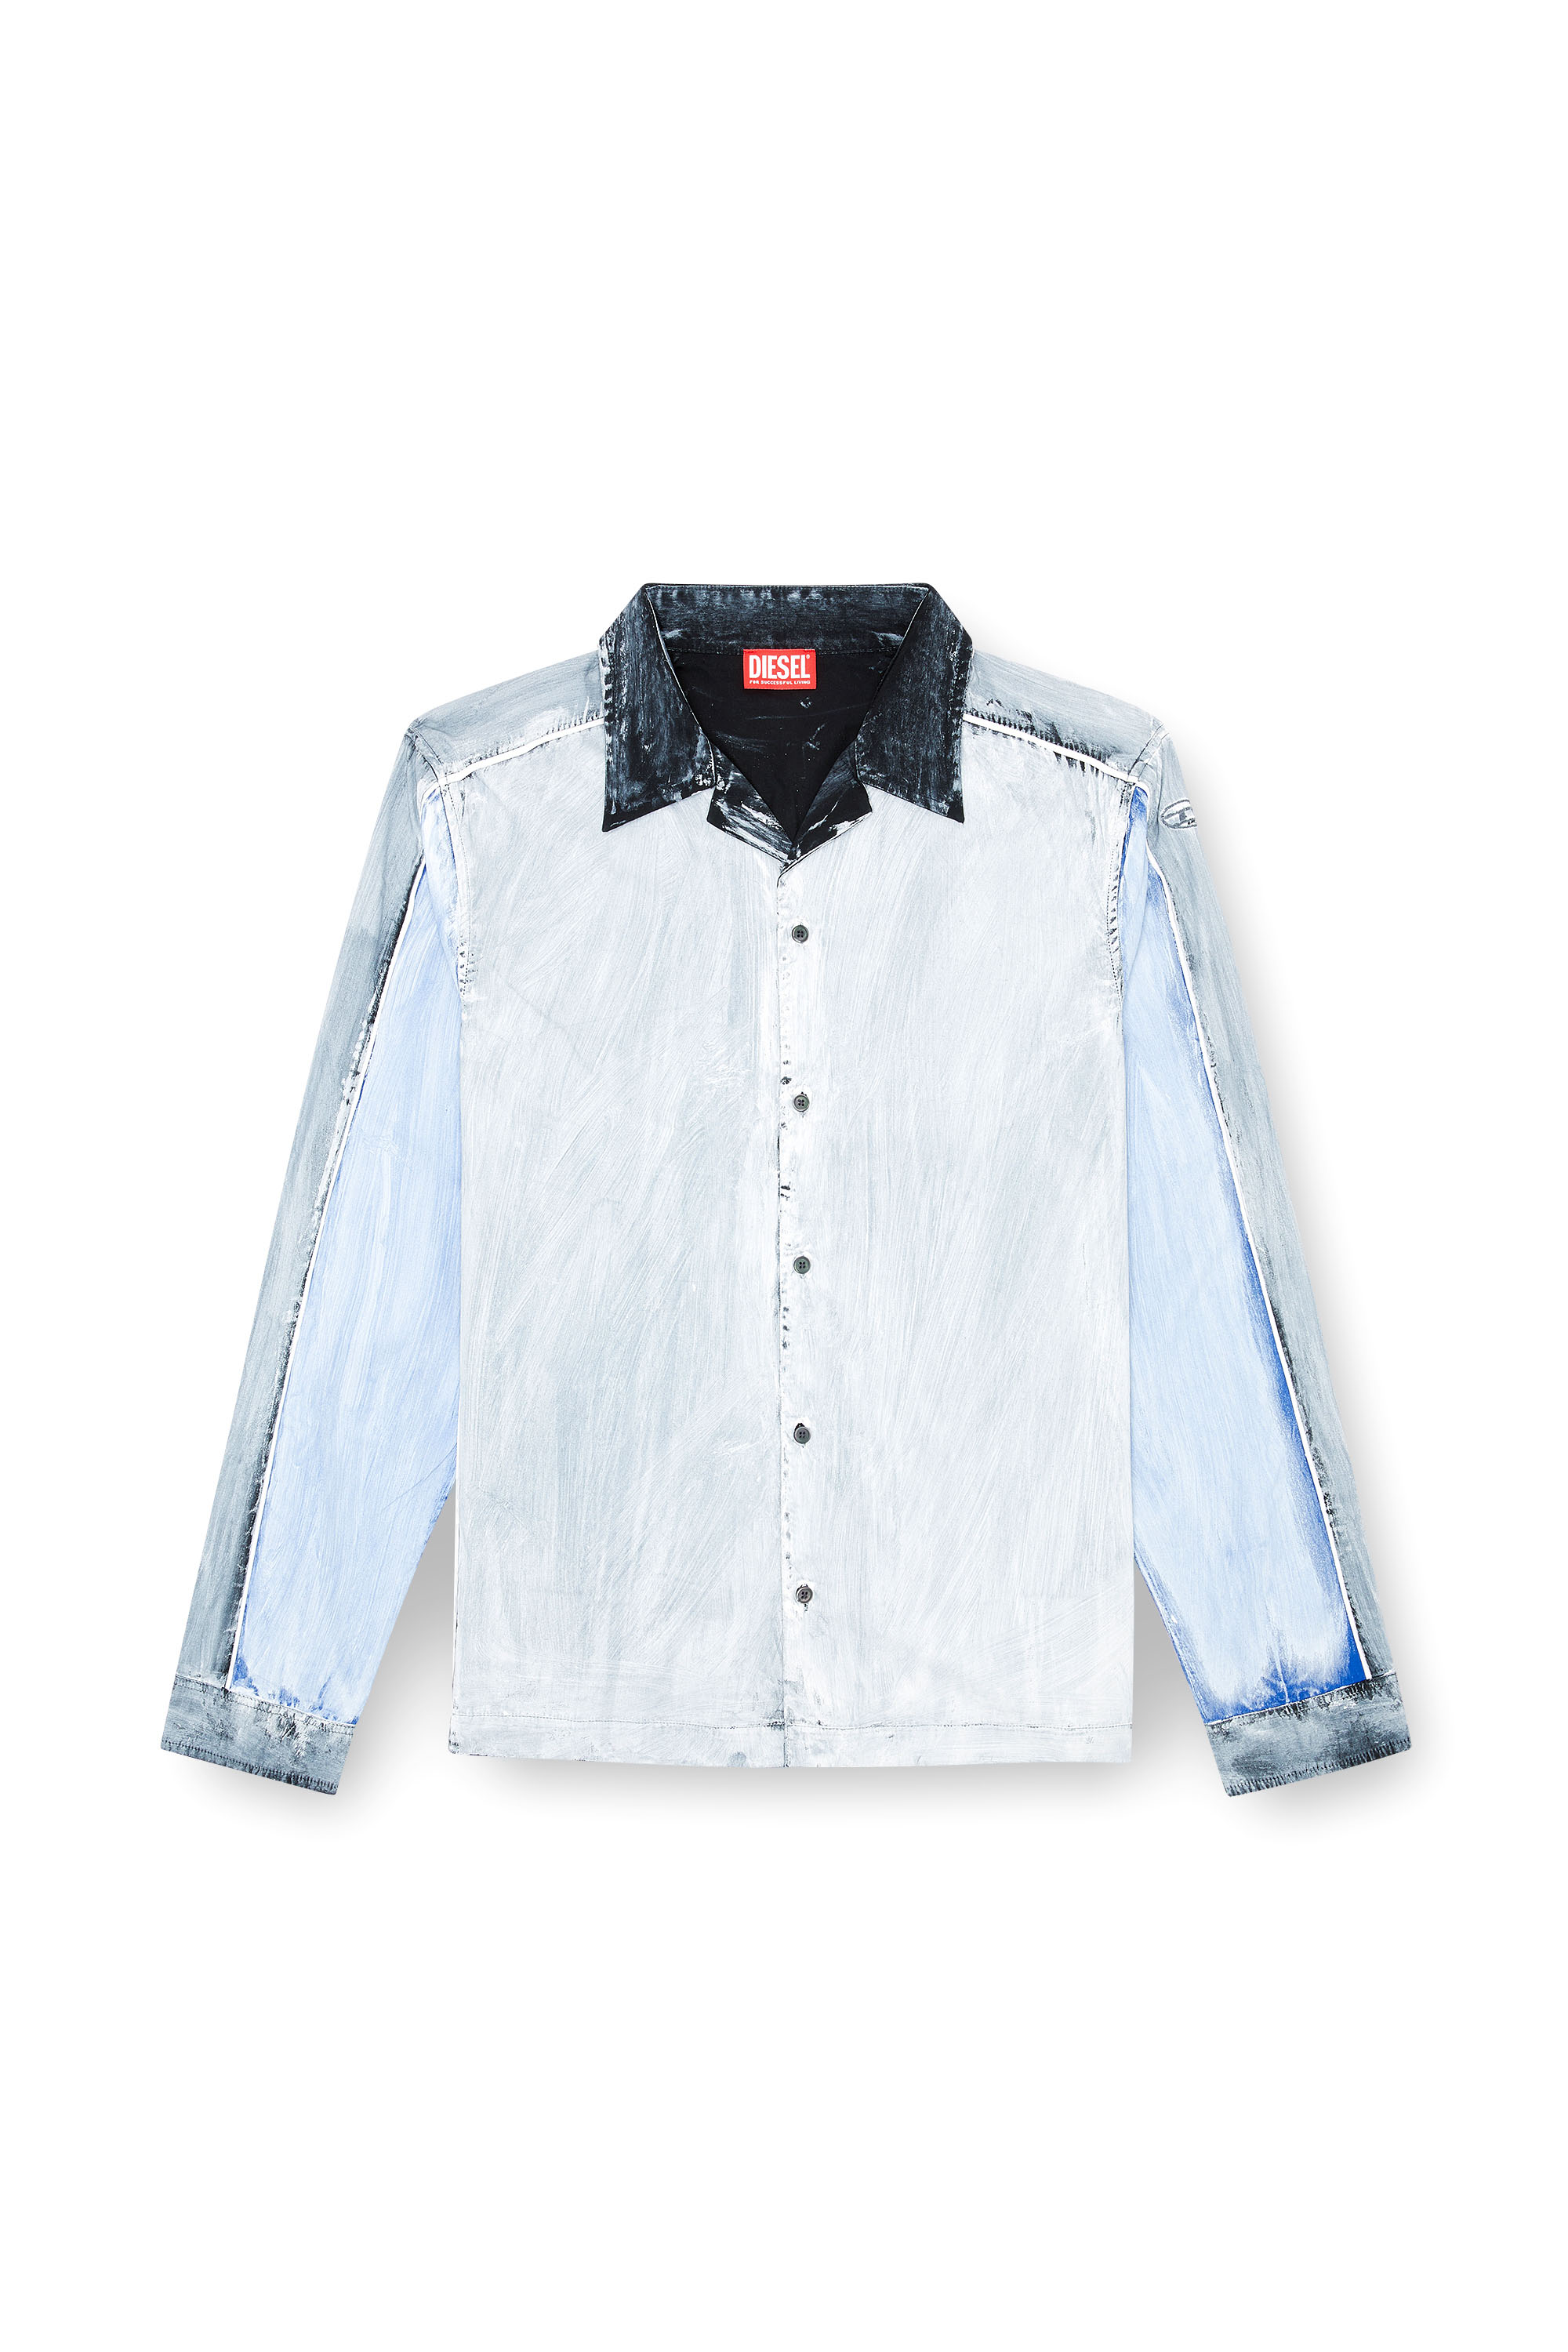 Diesel - S-CREED-BLOCK, Male Colour-block shirt in treated poplin in ブルー - Image 3